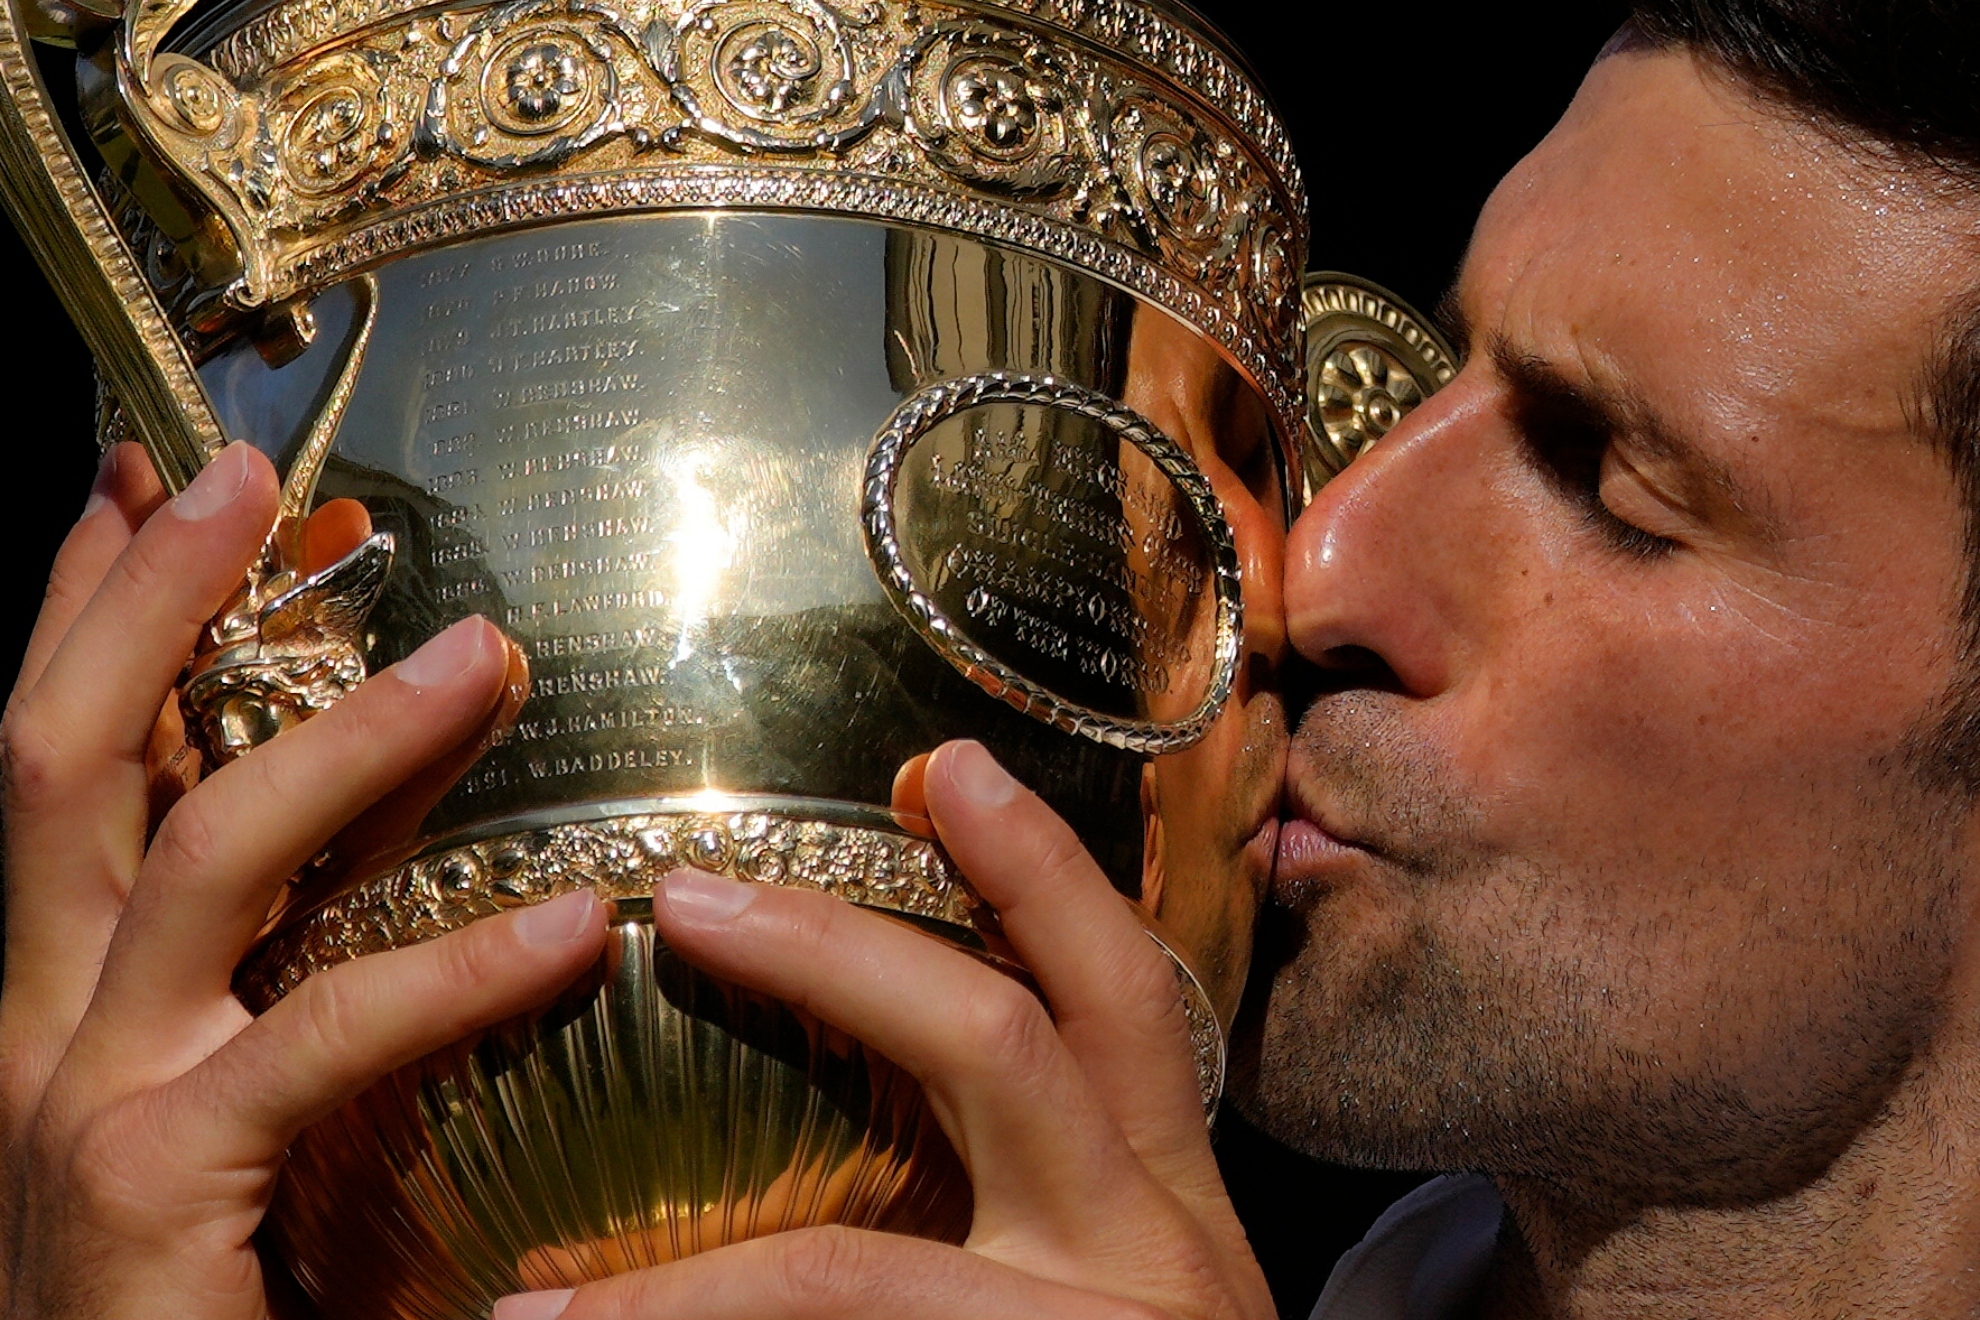 Djokovic besa el trofeo de Wimbledon